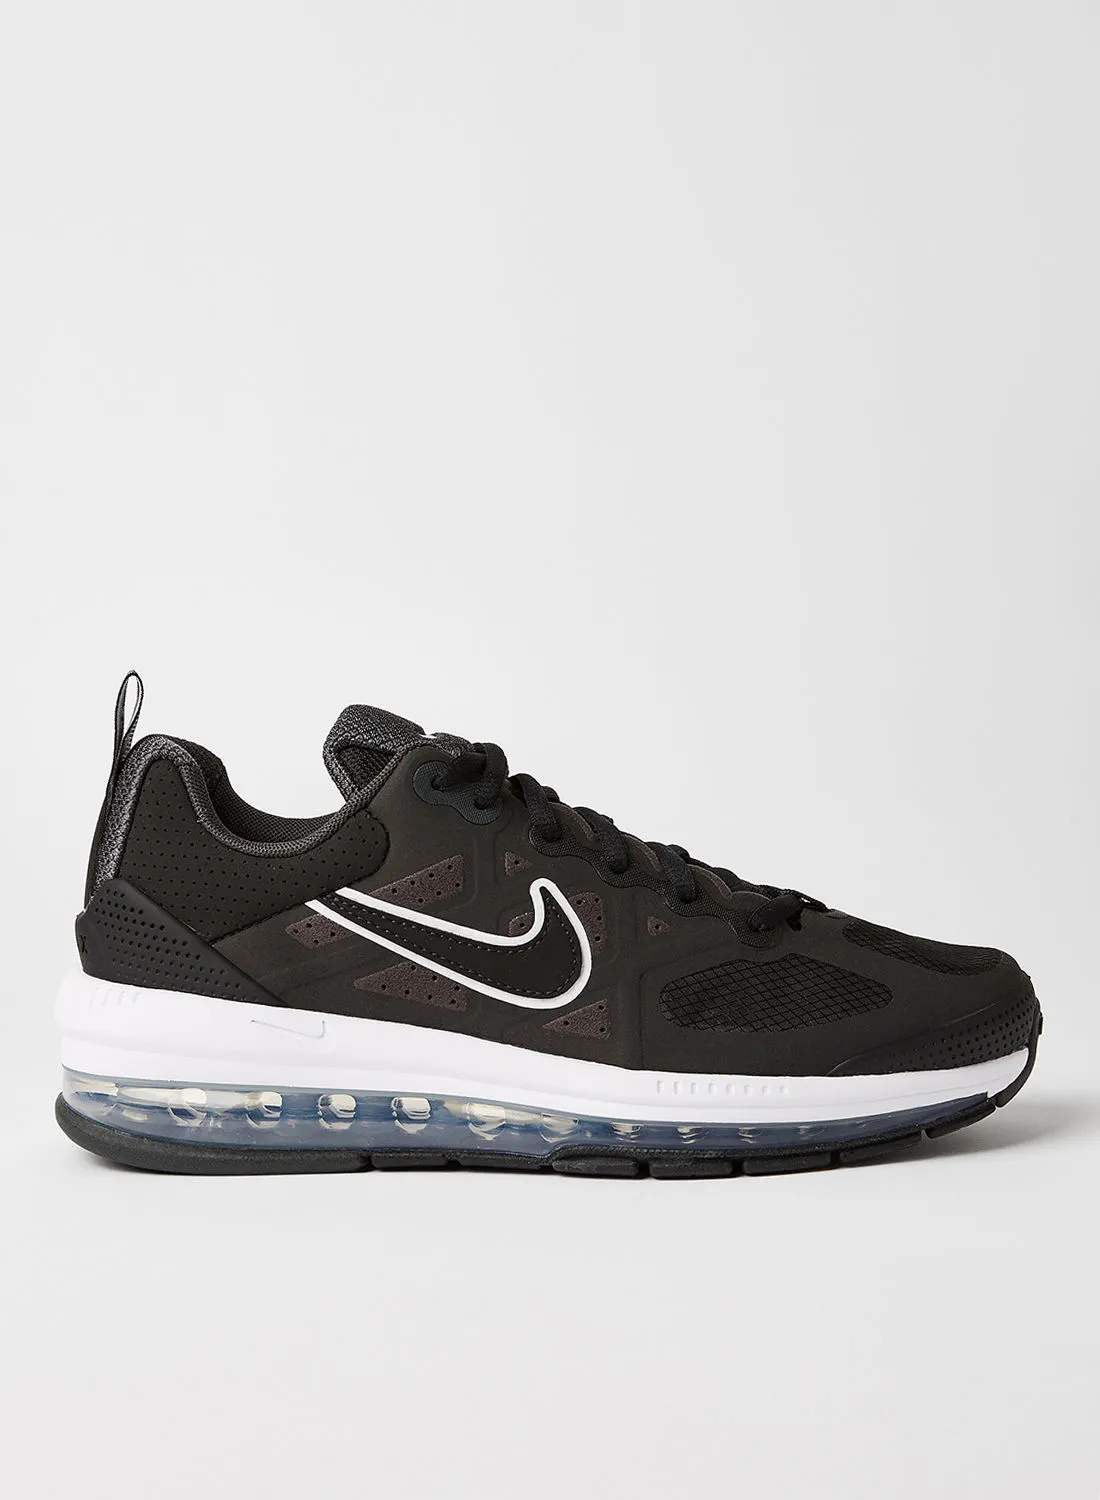 Nike Air Max Genome Sneakers Black/Black/Anthracite/White